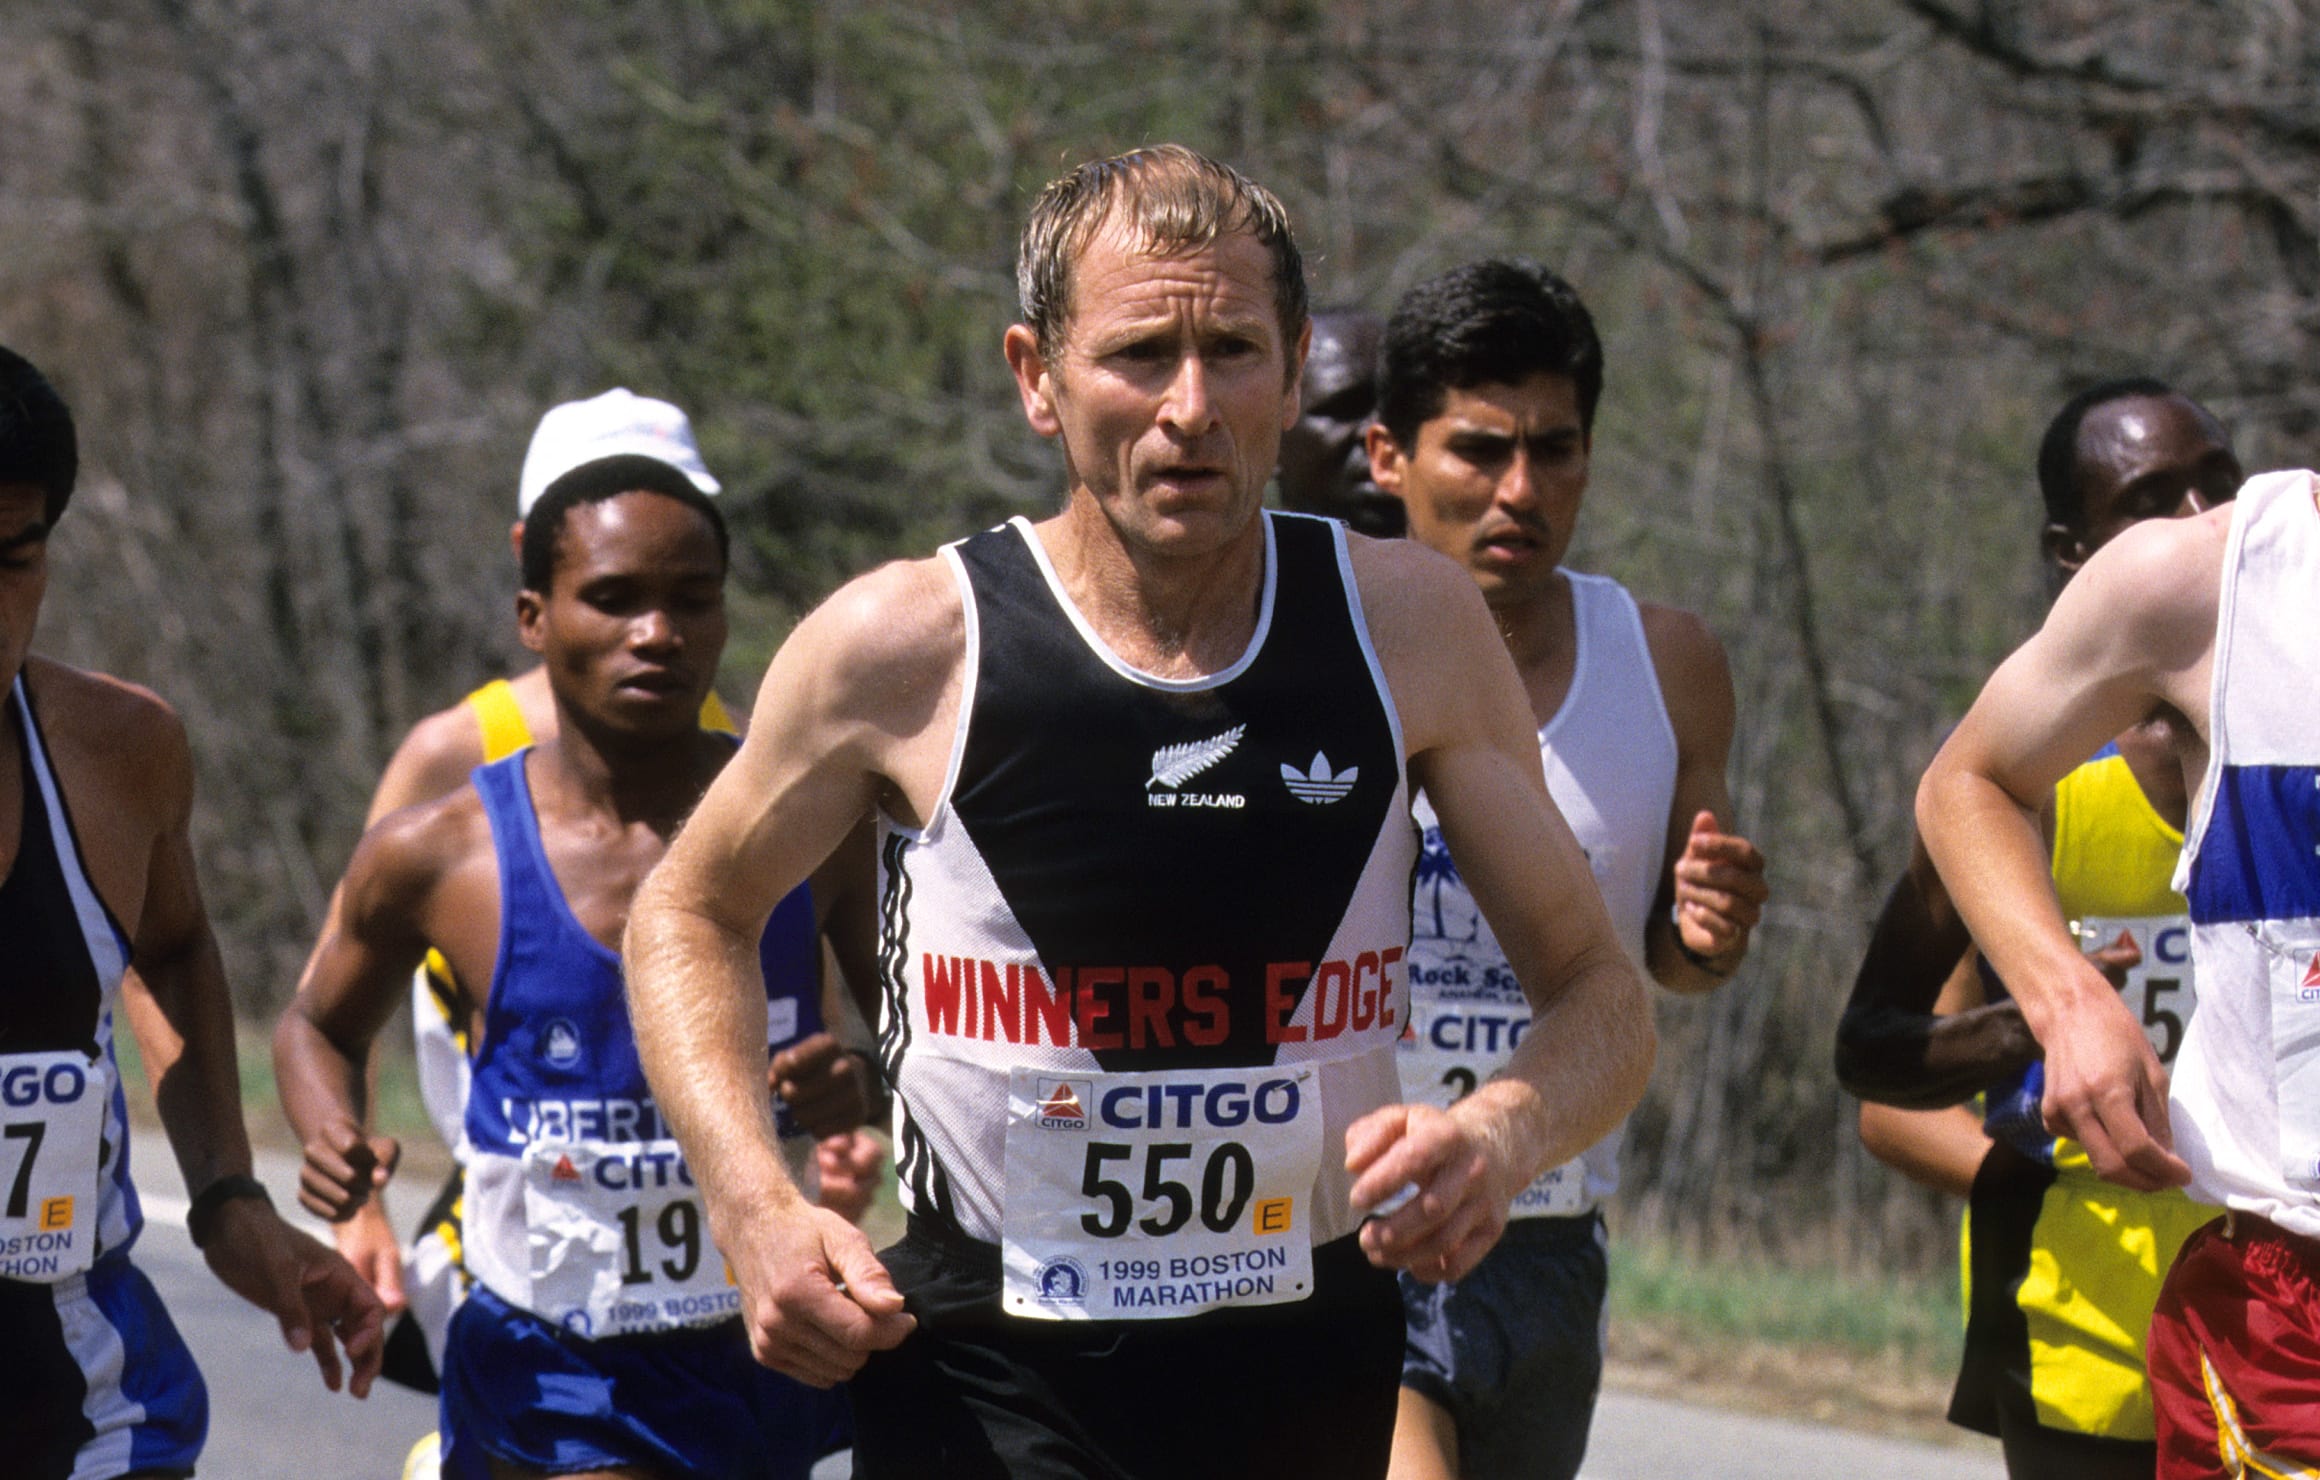 New Zealand runner John Campbell competing in the 1999 Boston Marathon.